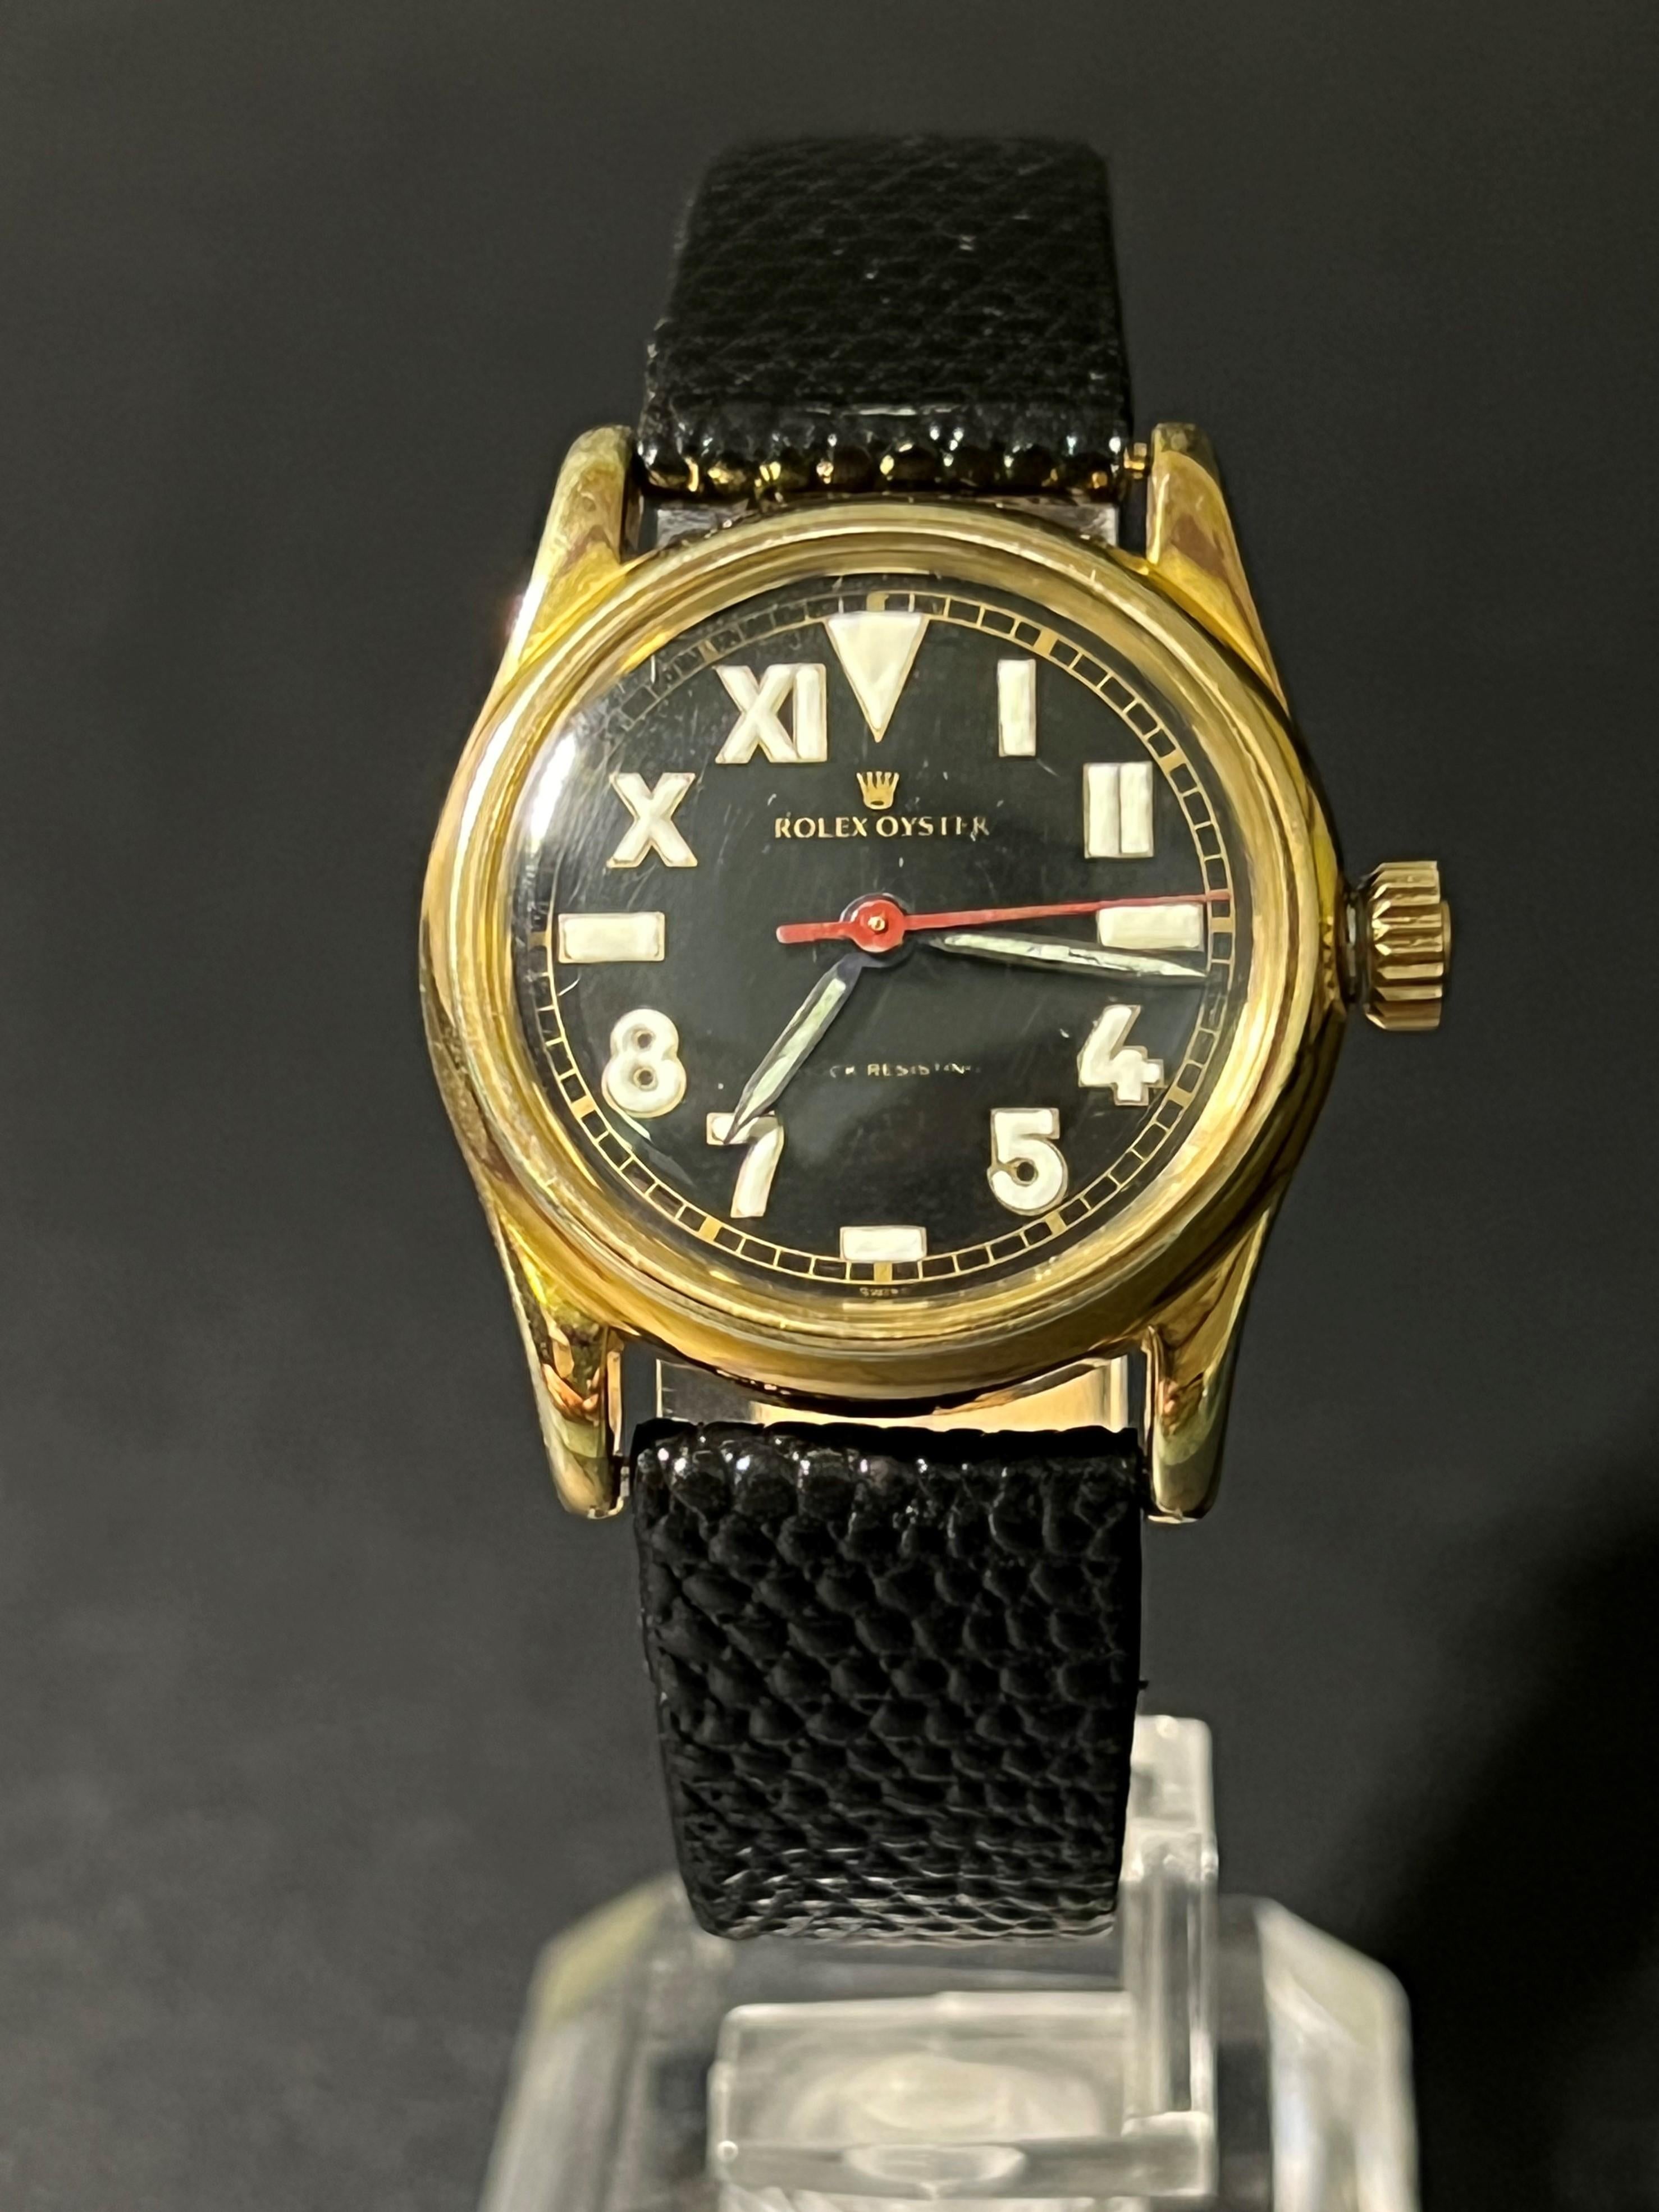 Rolex (Victory) California Dial Ref. 7448 circa 1942

DETAILS

Length: 8.9